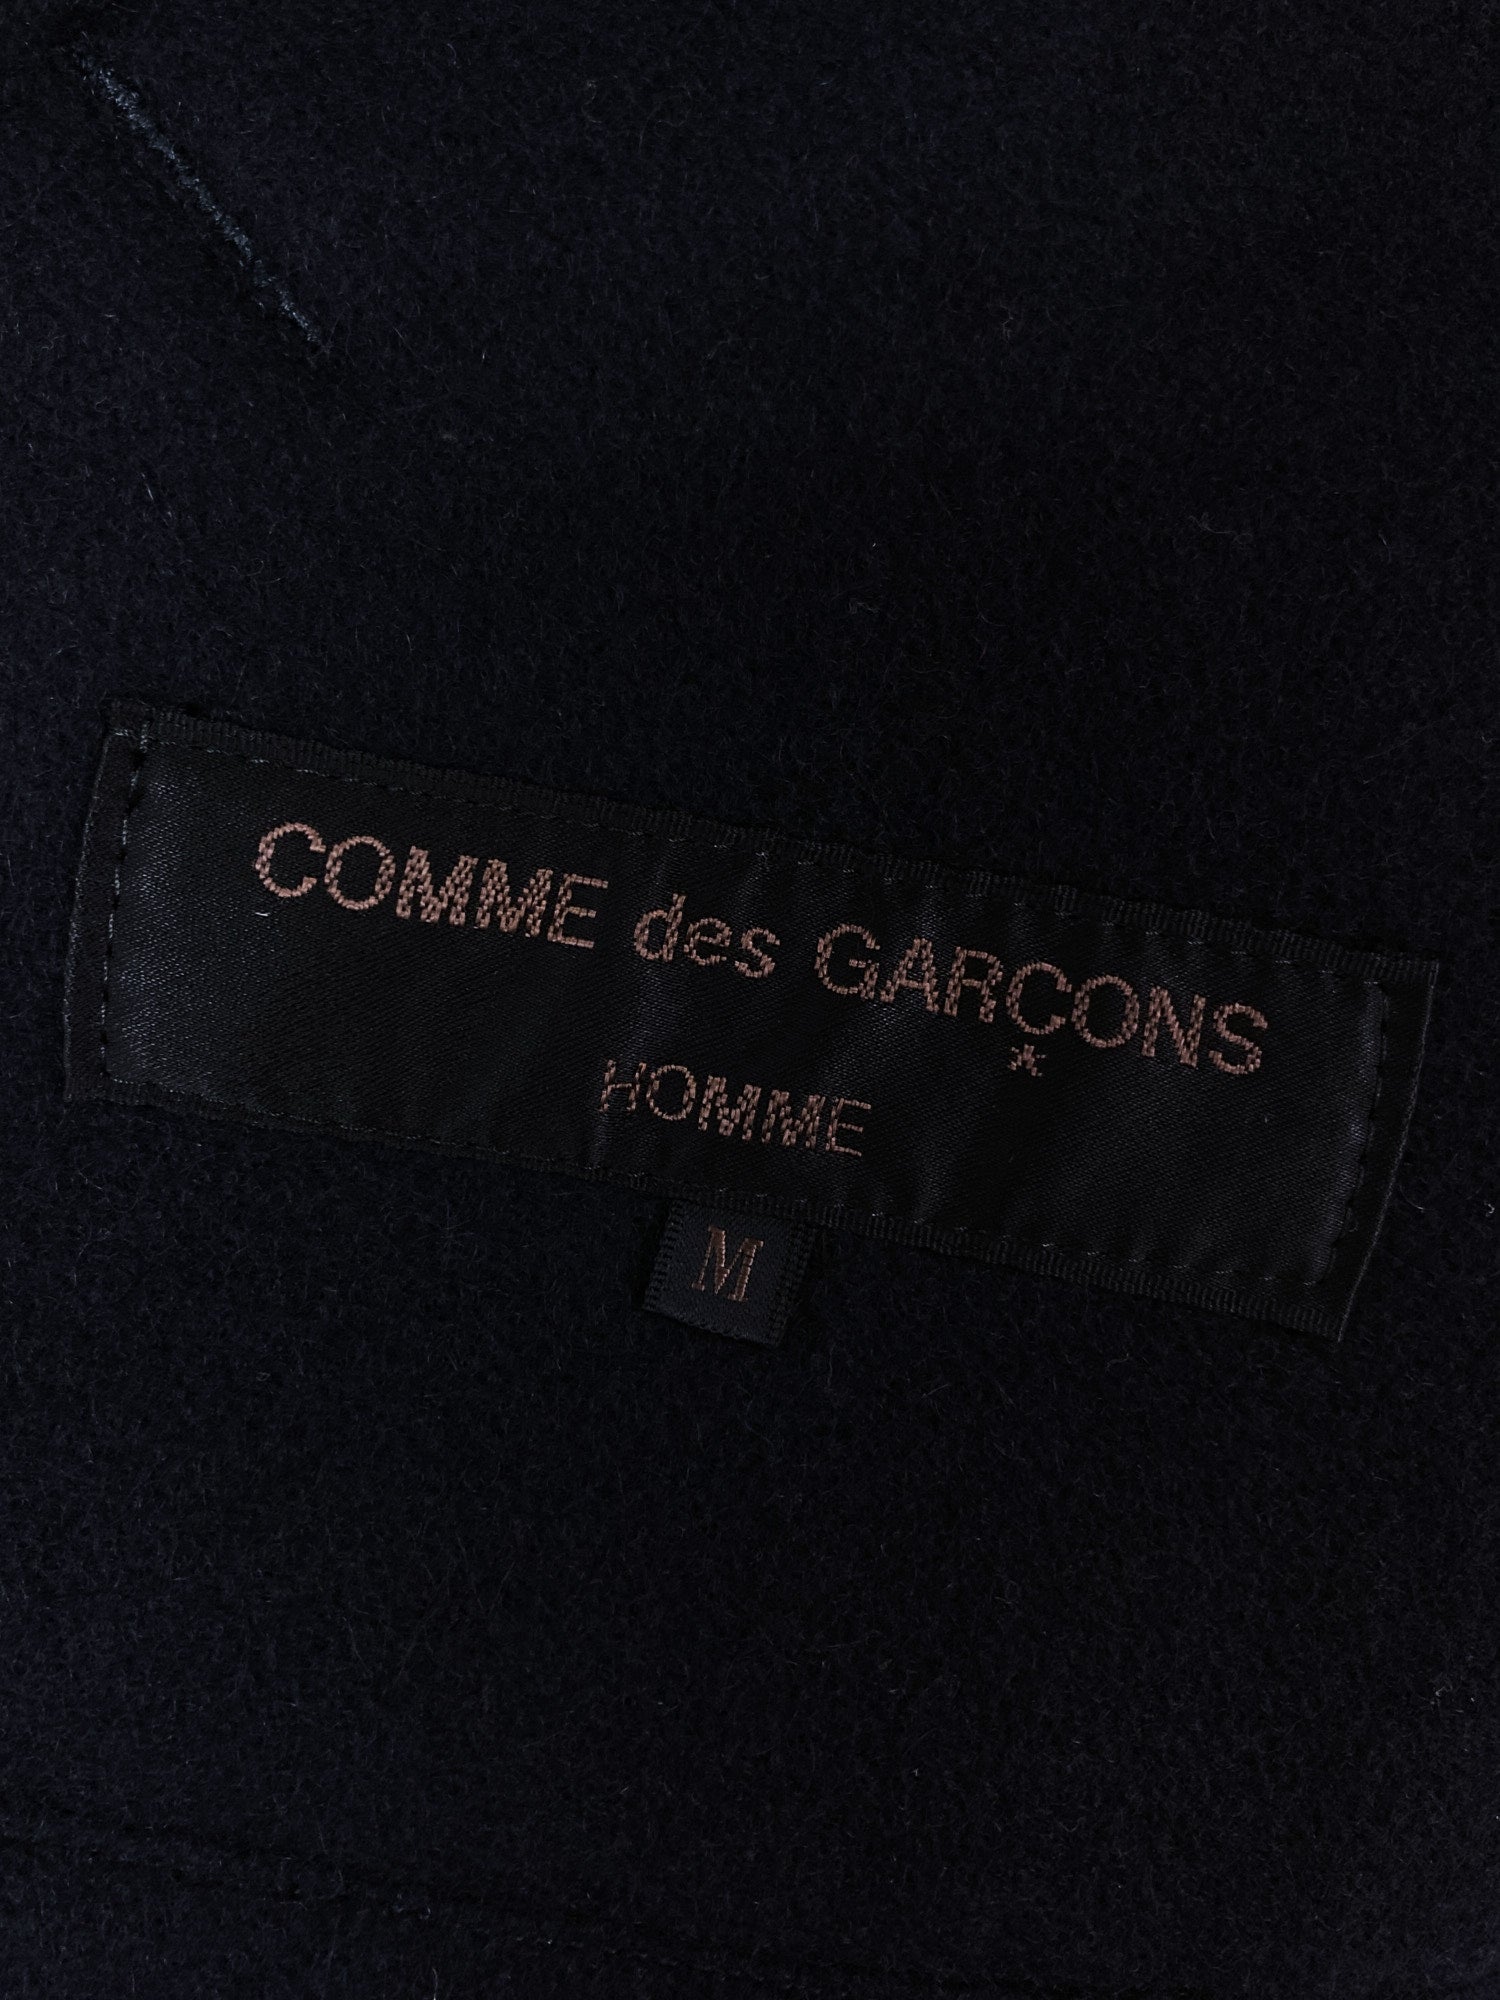 Comme des Garcons Homme 1993 dark navy wool melton hooded parka coat - M